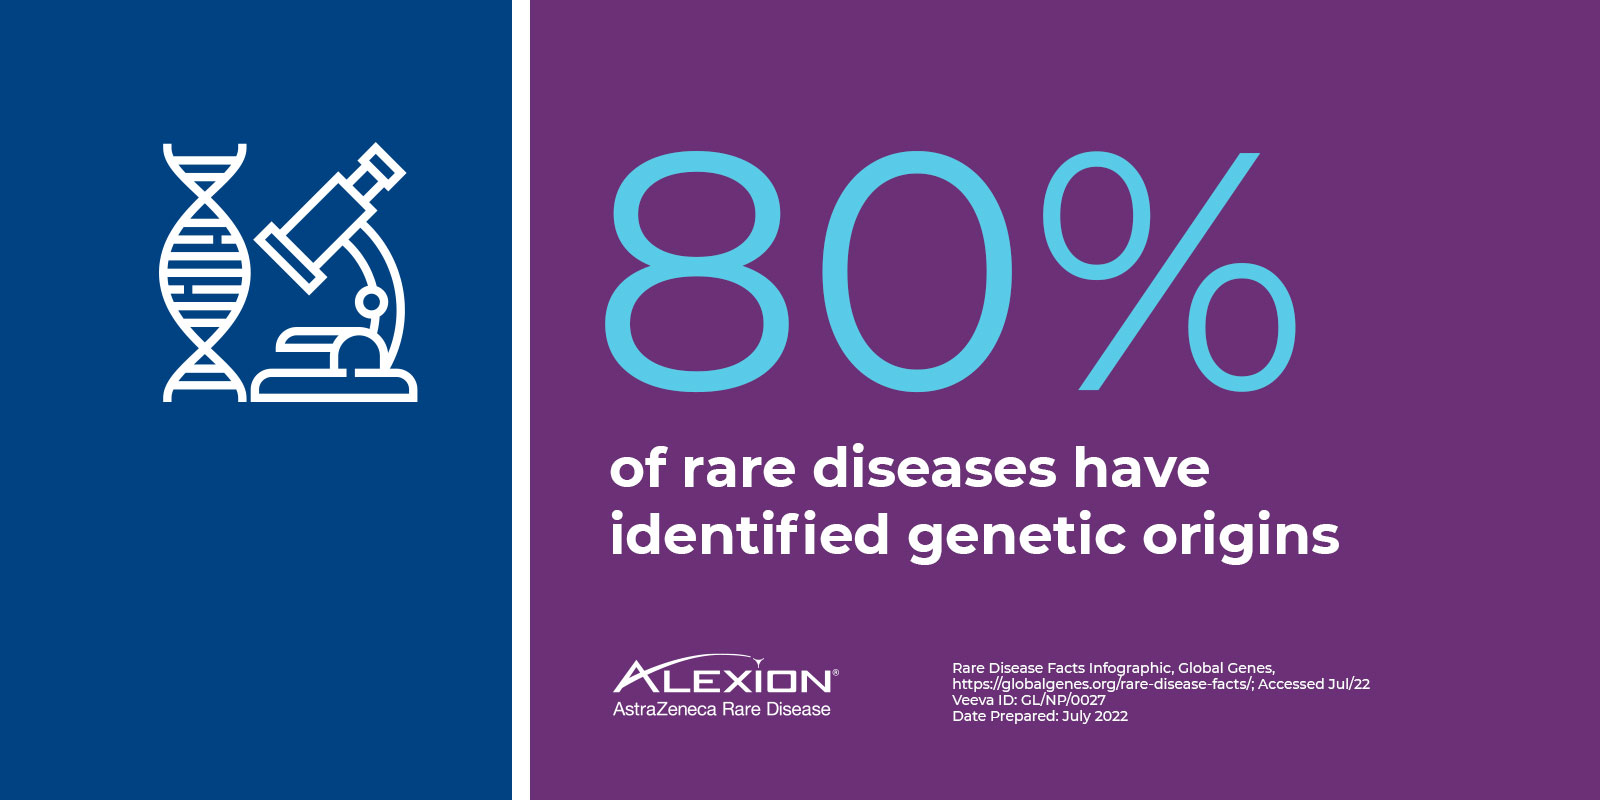 Text: 80% of rare diseases have identified genetic origins